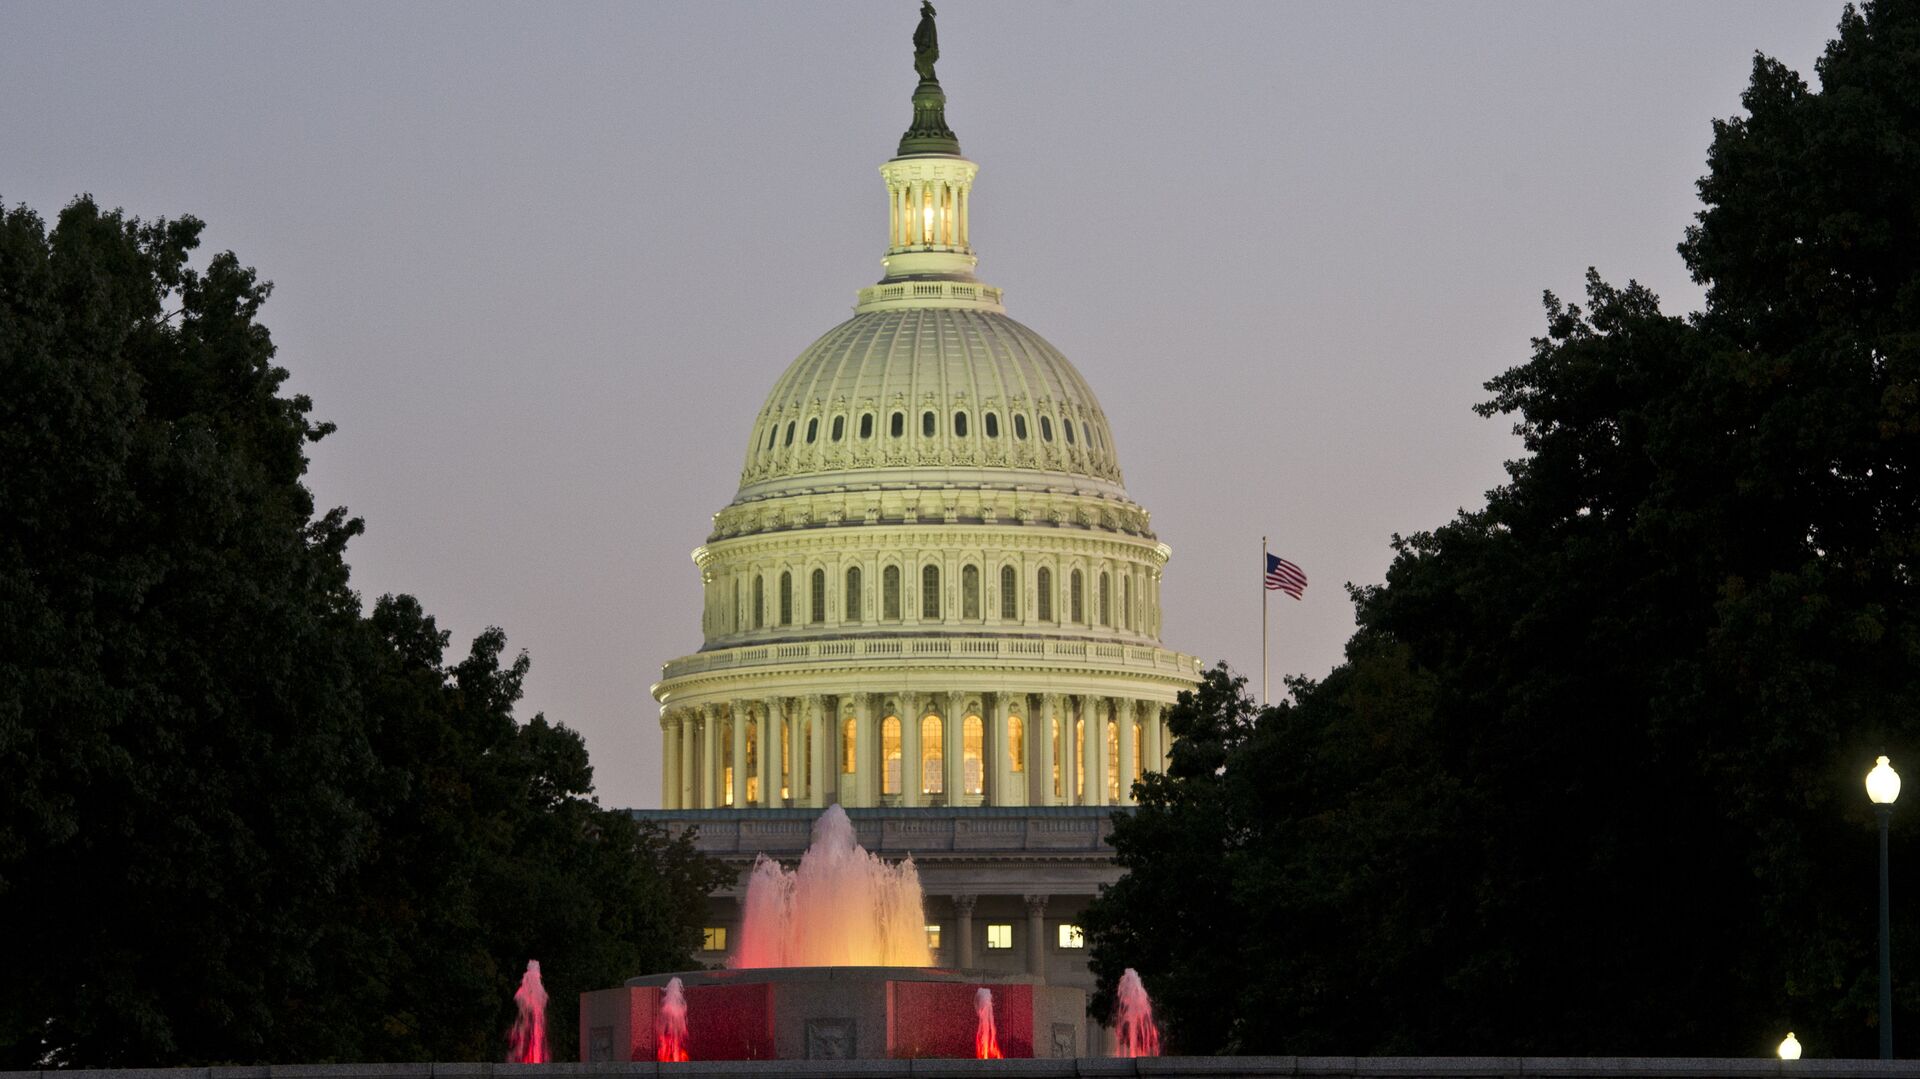 The US Congress building. (File) - Sputnik International, 1920, 04.02.2021